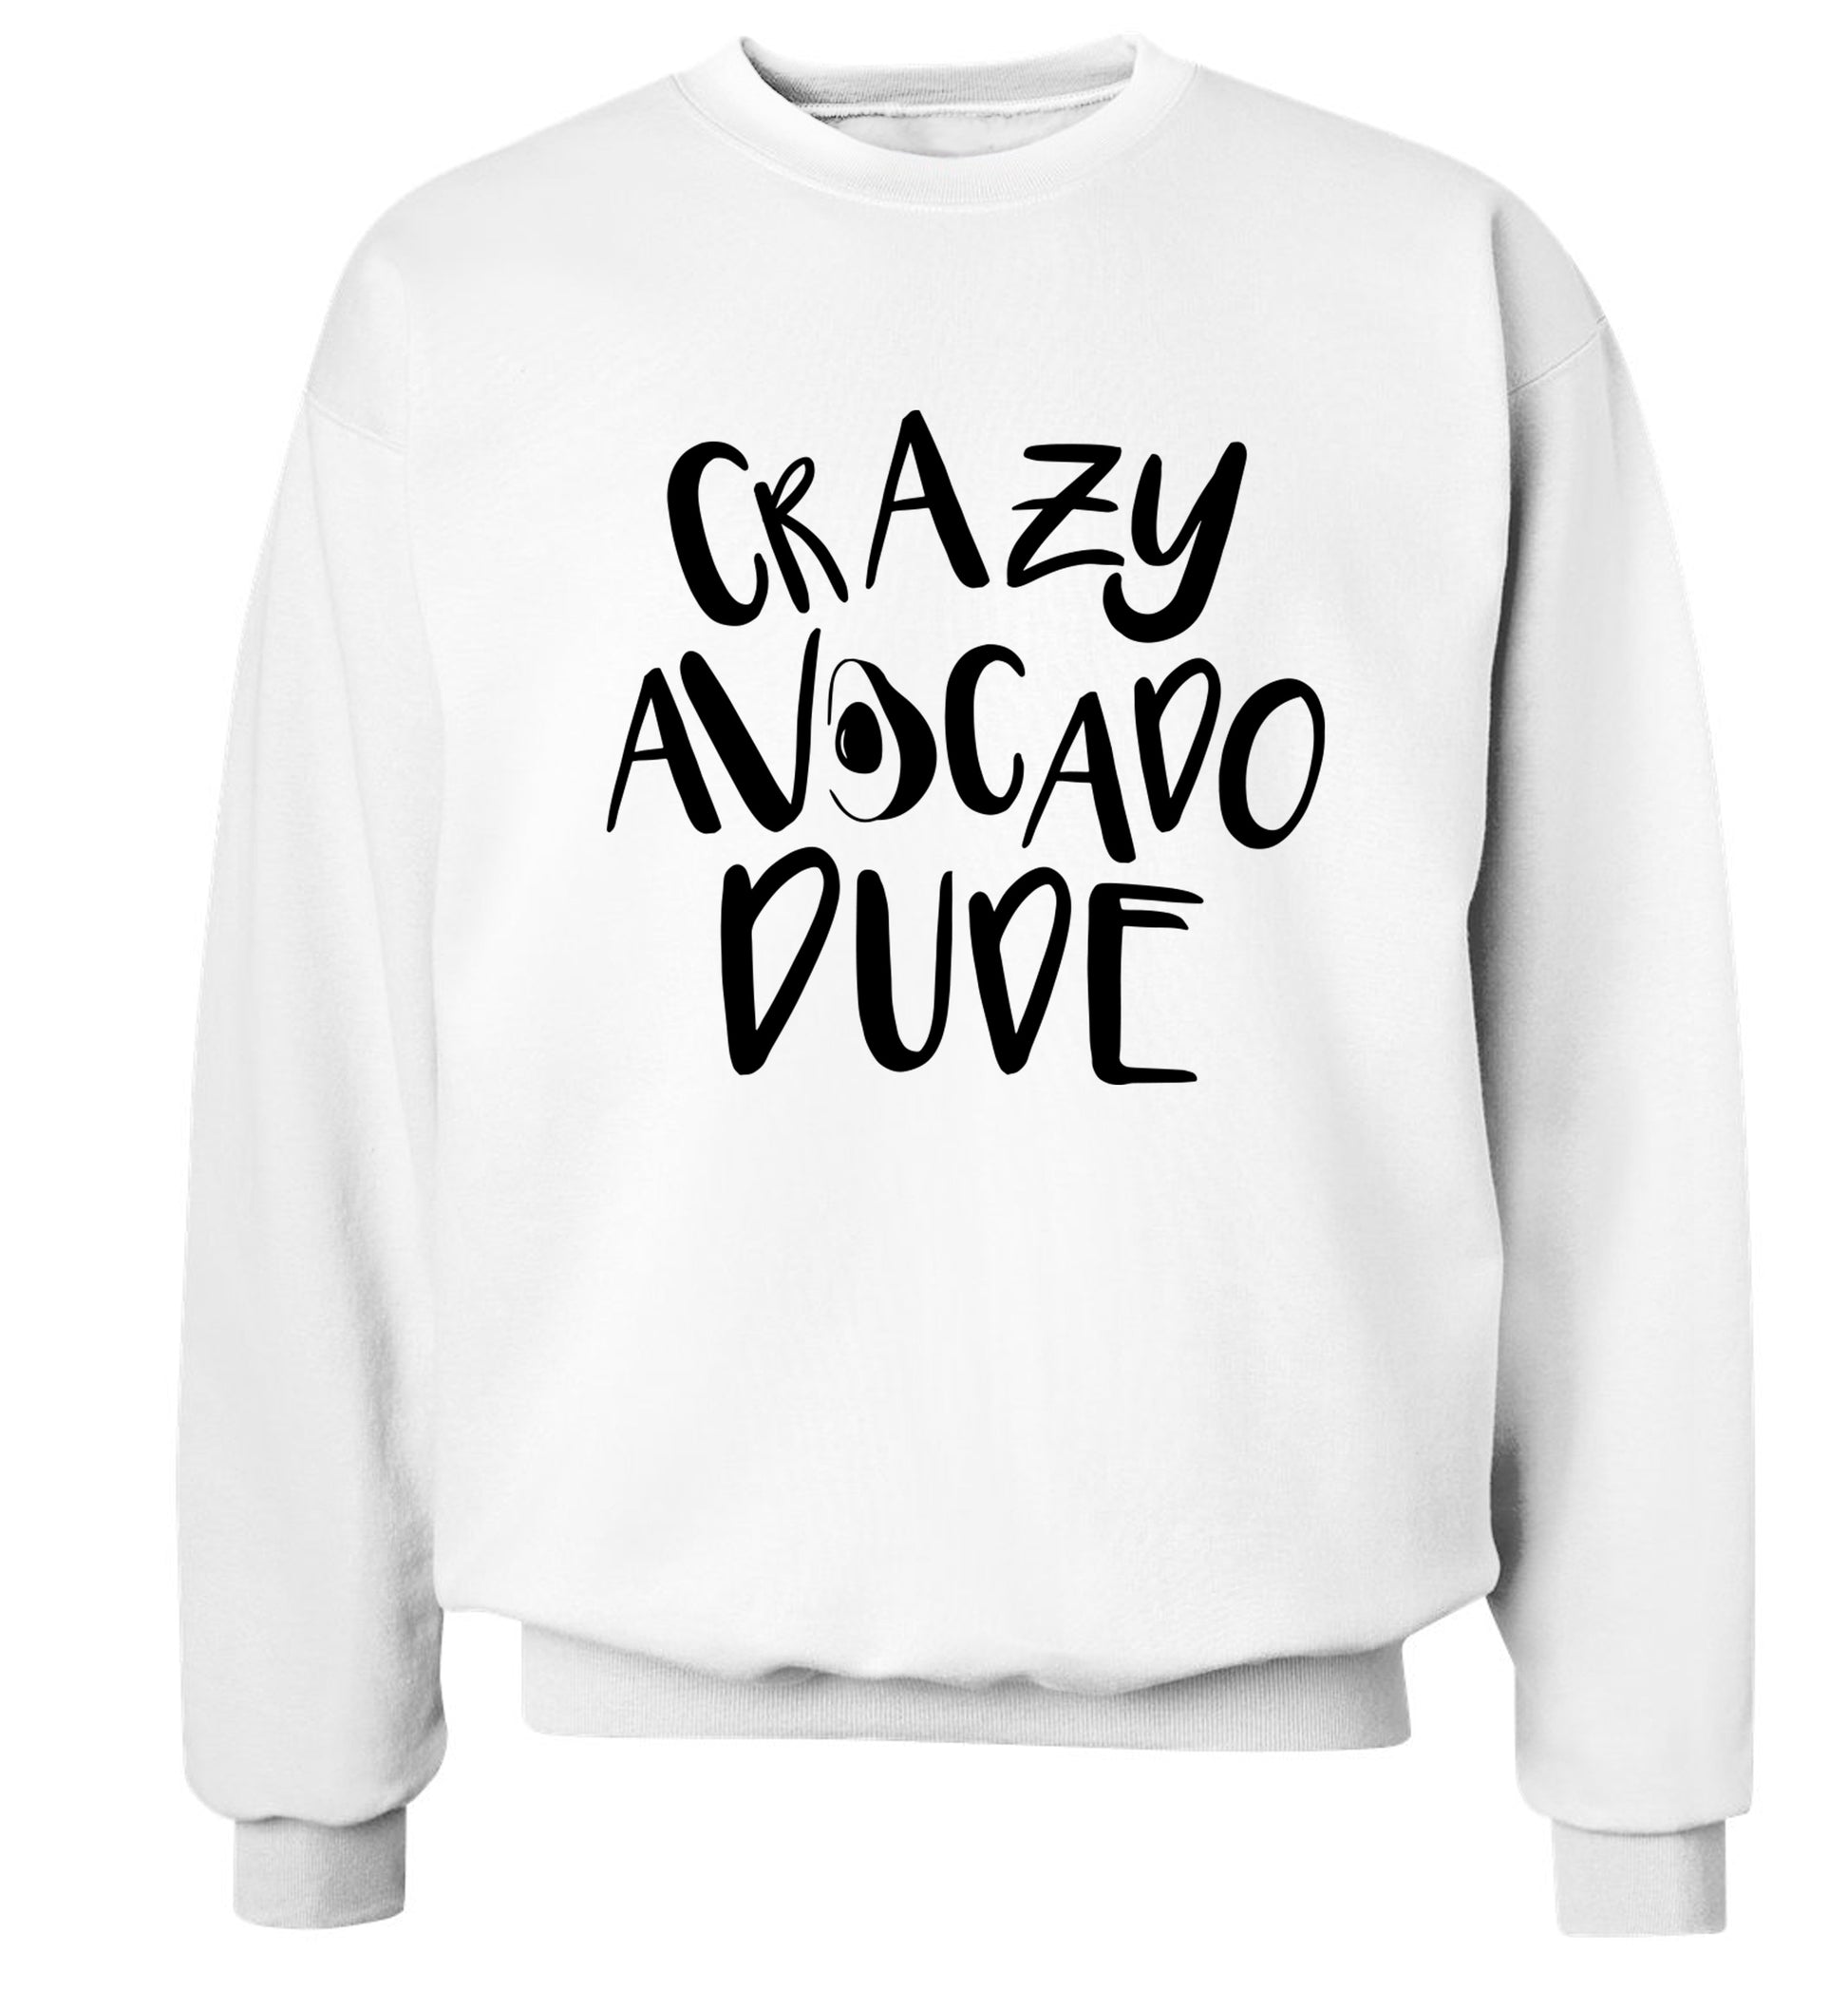 Crazy avocado dude Adult's unisex white Sweater 2XL